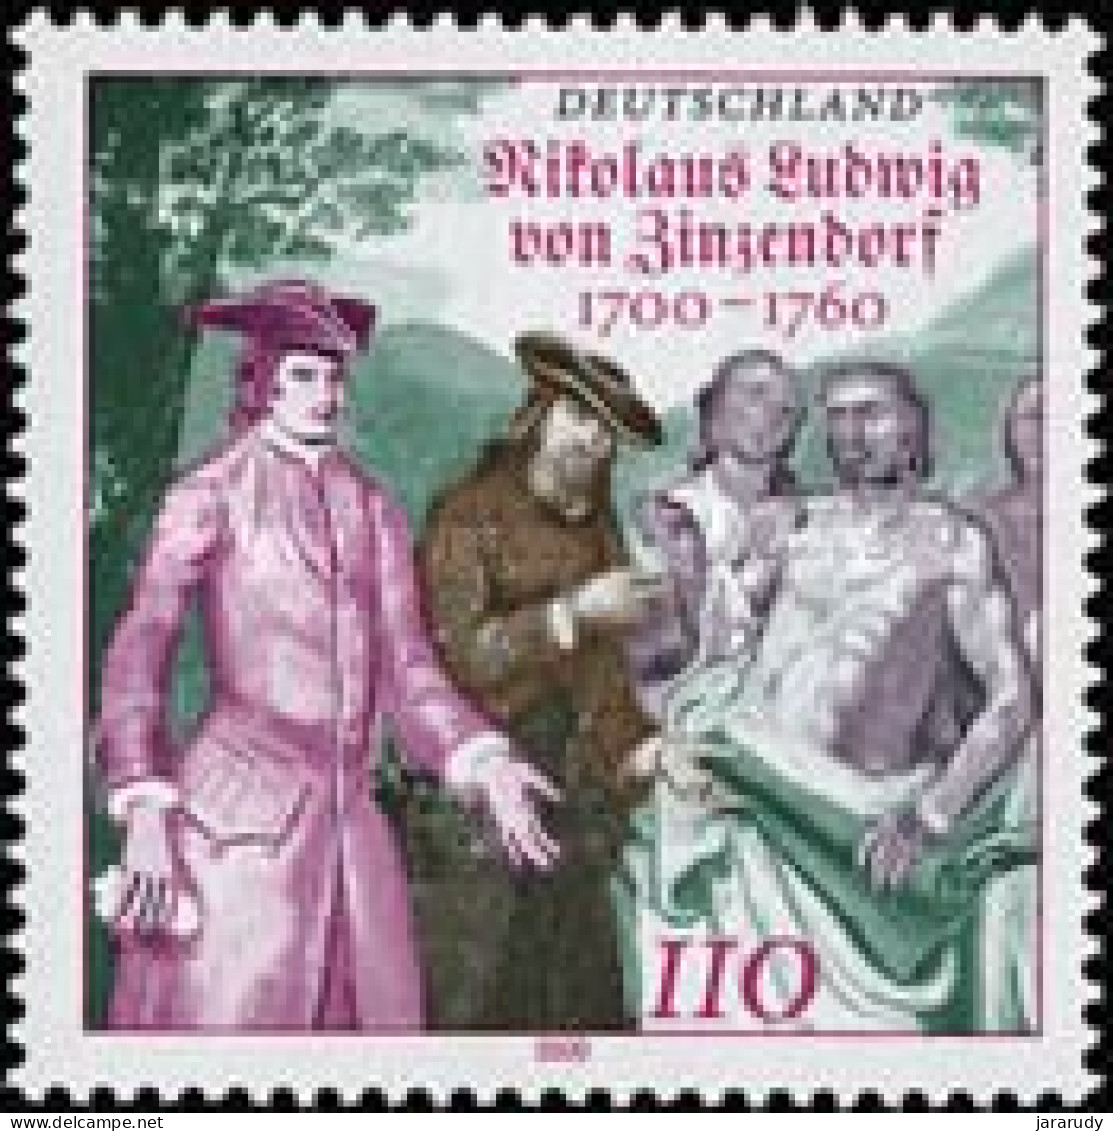 ALEMANIA PERSONAJE 2000 Yv 1947 MNH - Unused Stamps